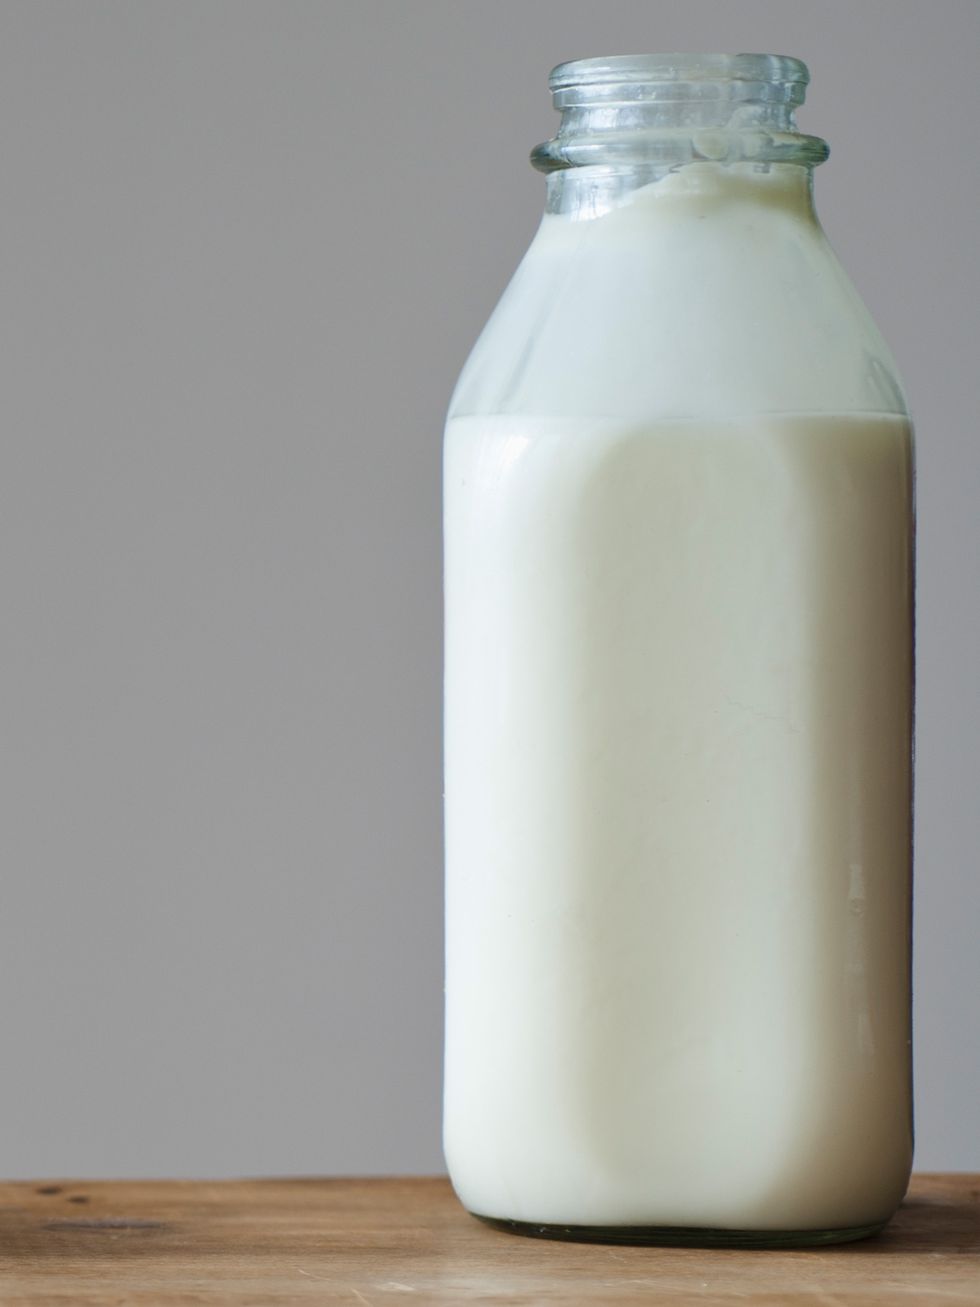 Milk, Raw milk, Lactose, Dairy, Food, Buttermilk, Grain milk, Soy milk, Almond milk, Plant milk, 